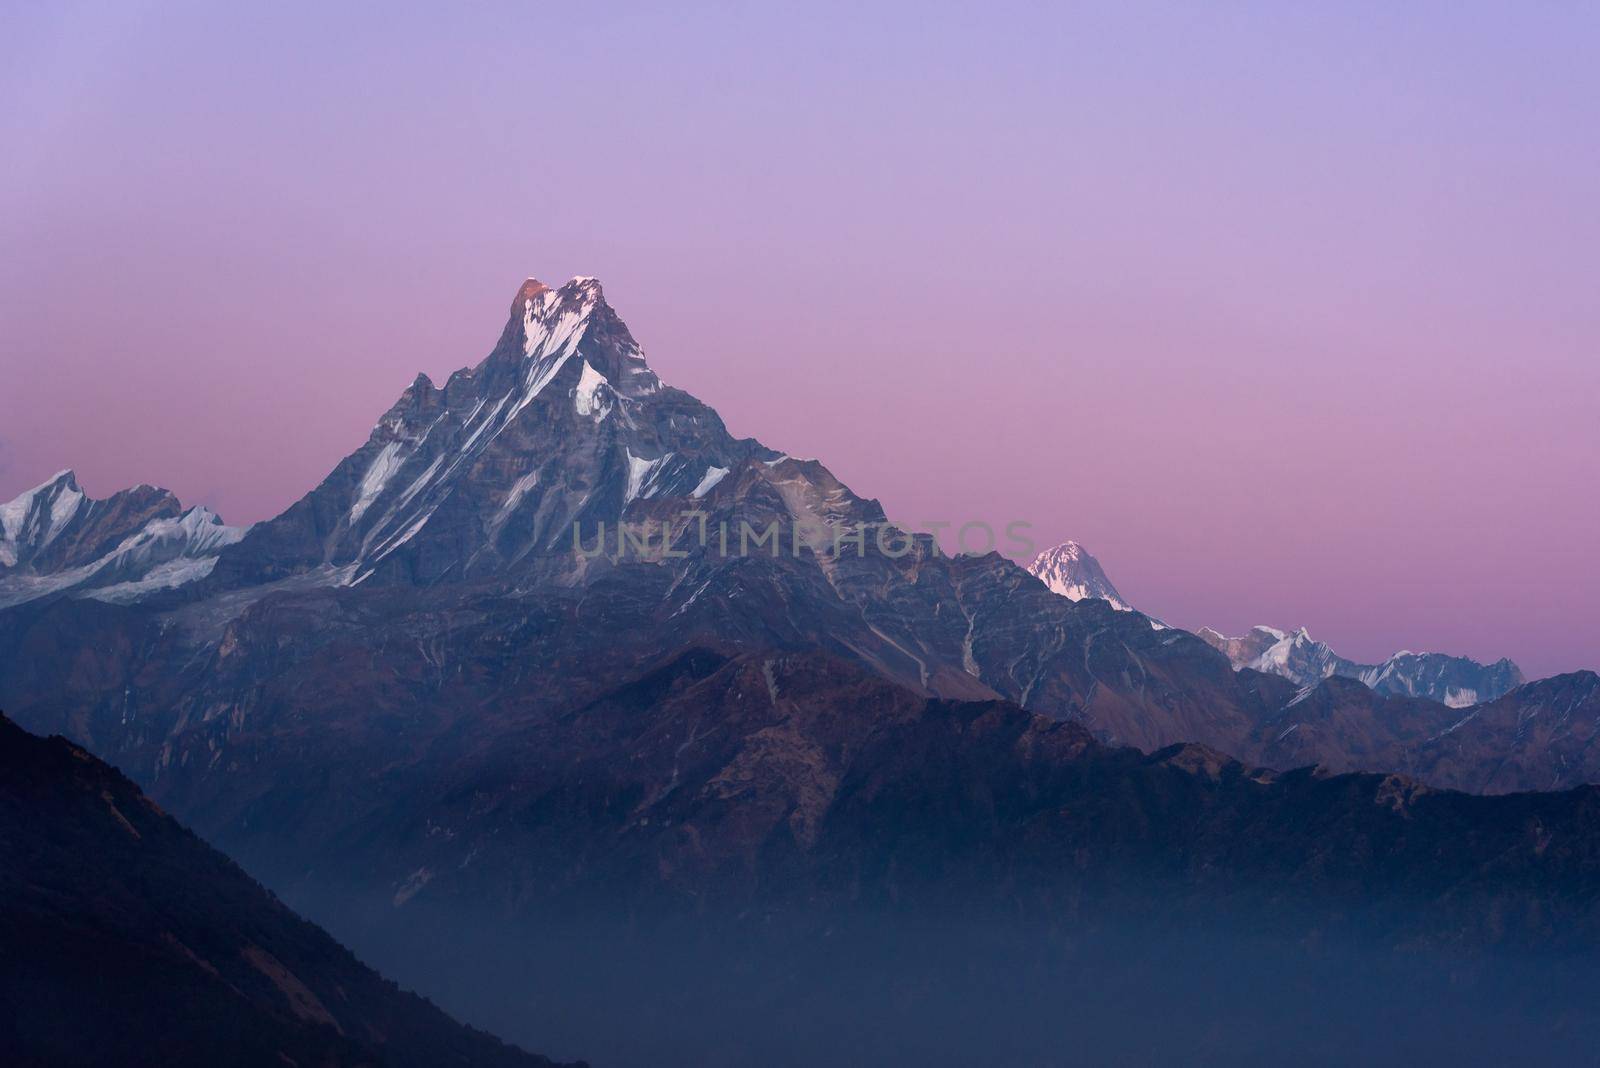 Fishtail peak or Machapuchare mountain  during sunset enviroment at Nepal. by Nuamfolio